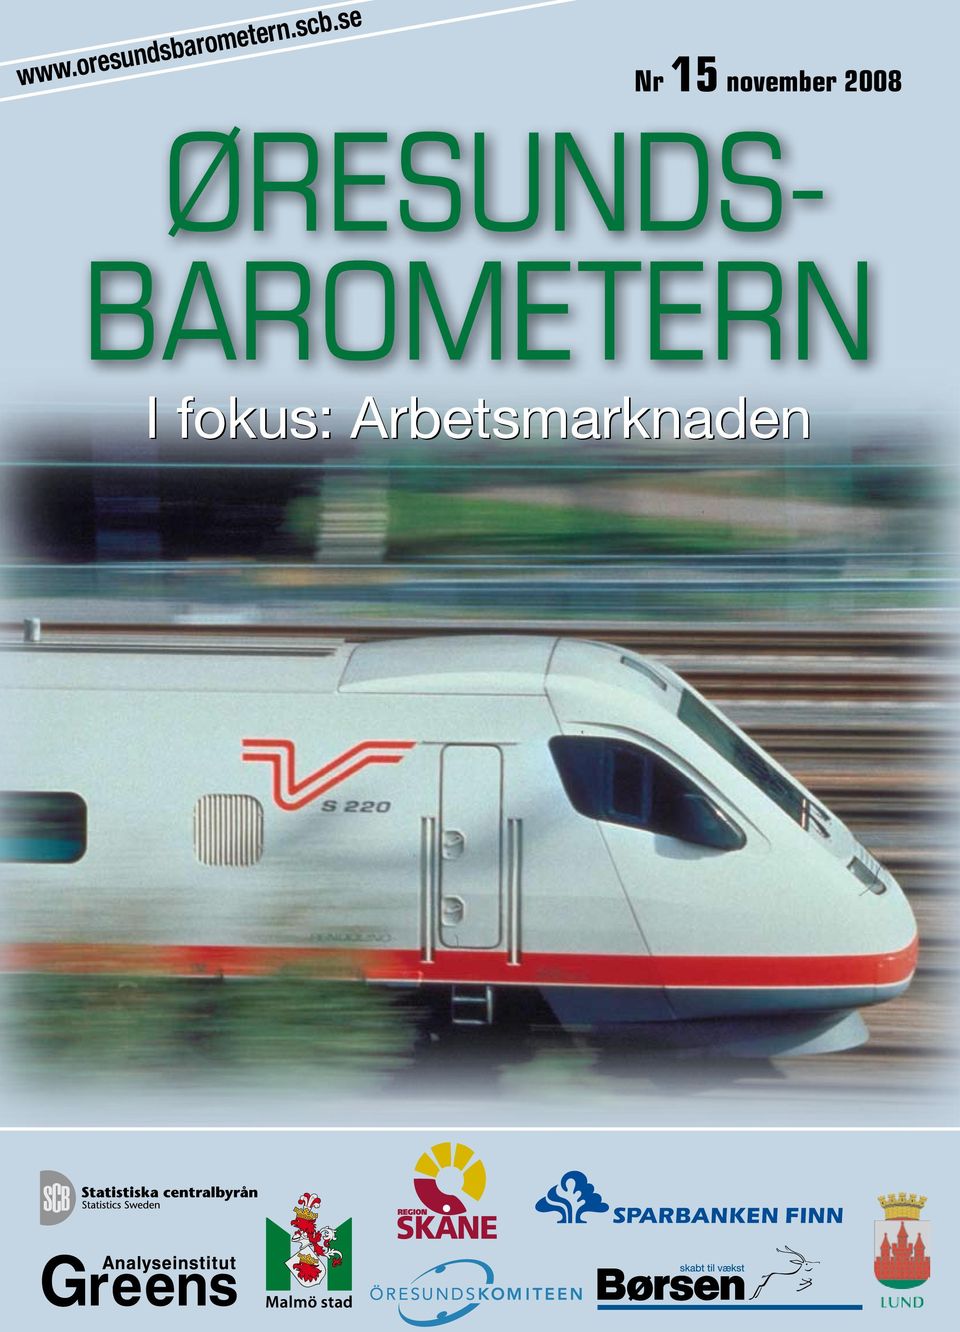 ØRESUNDS- BAROMETERN I